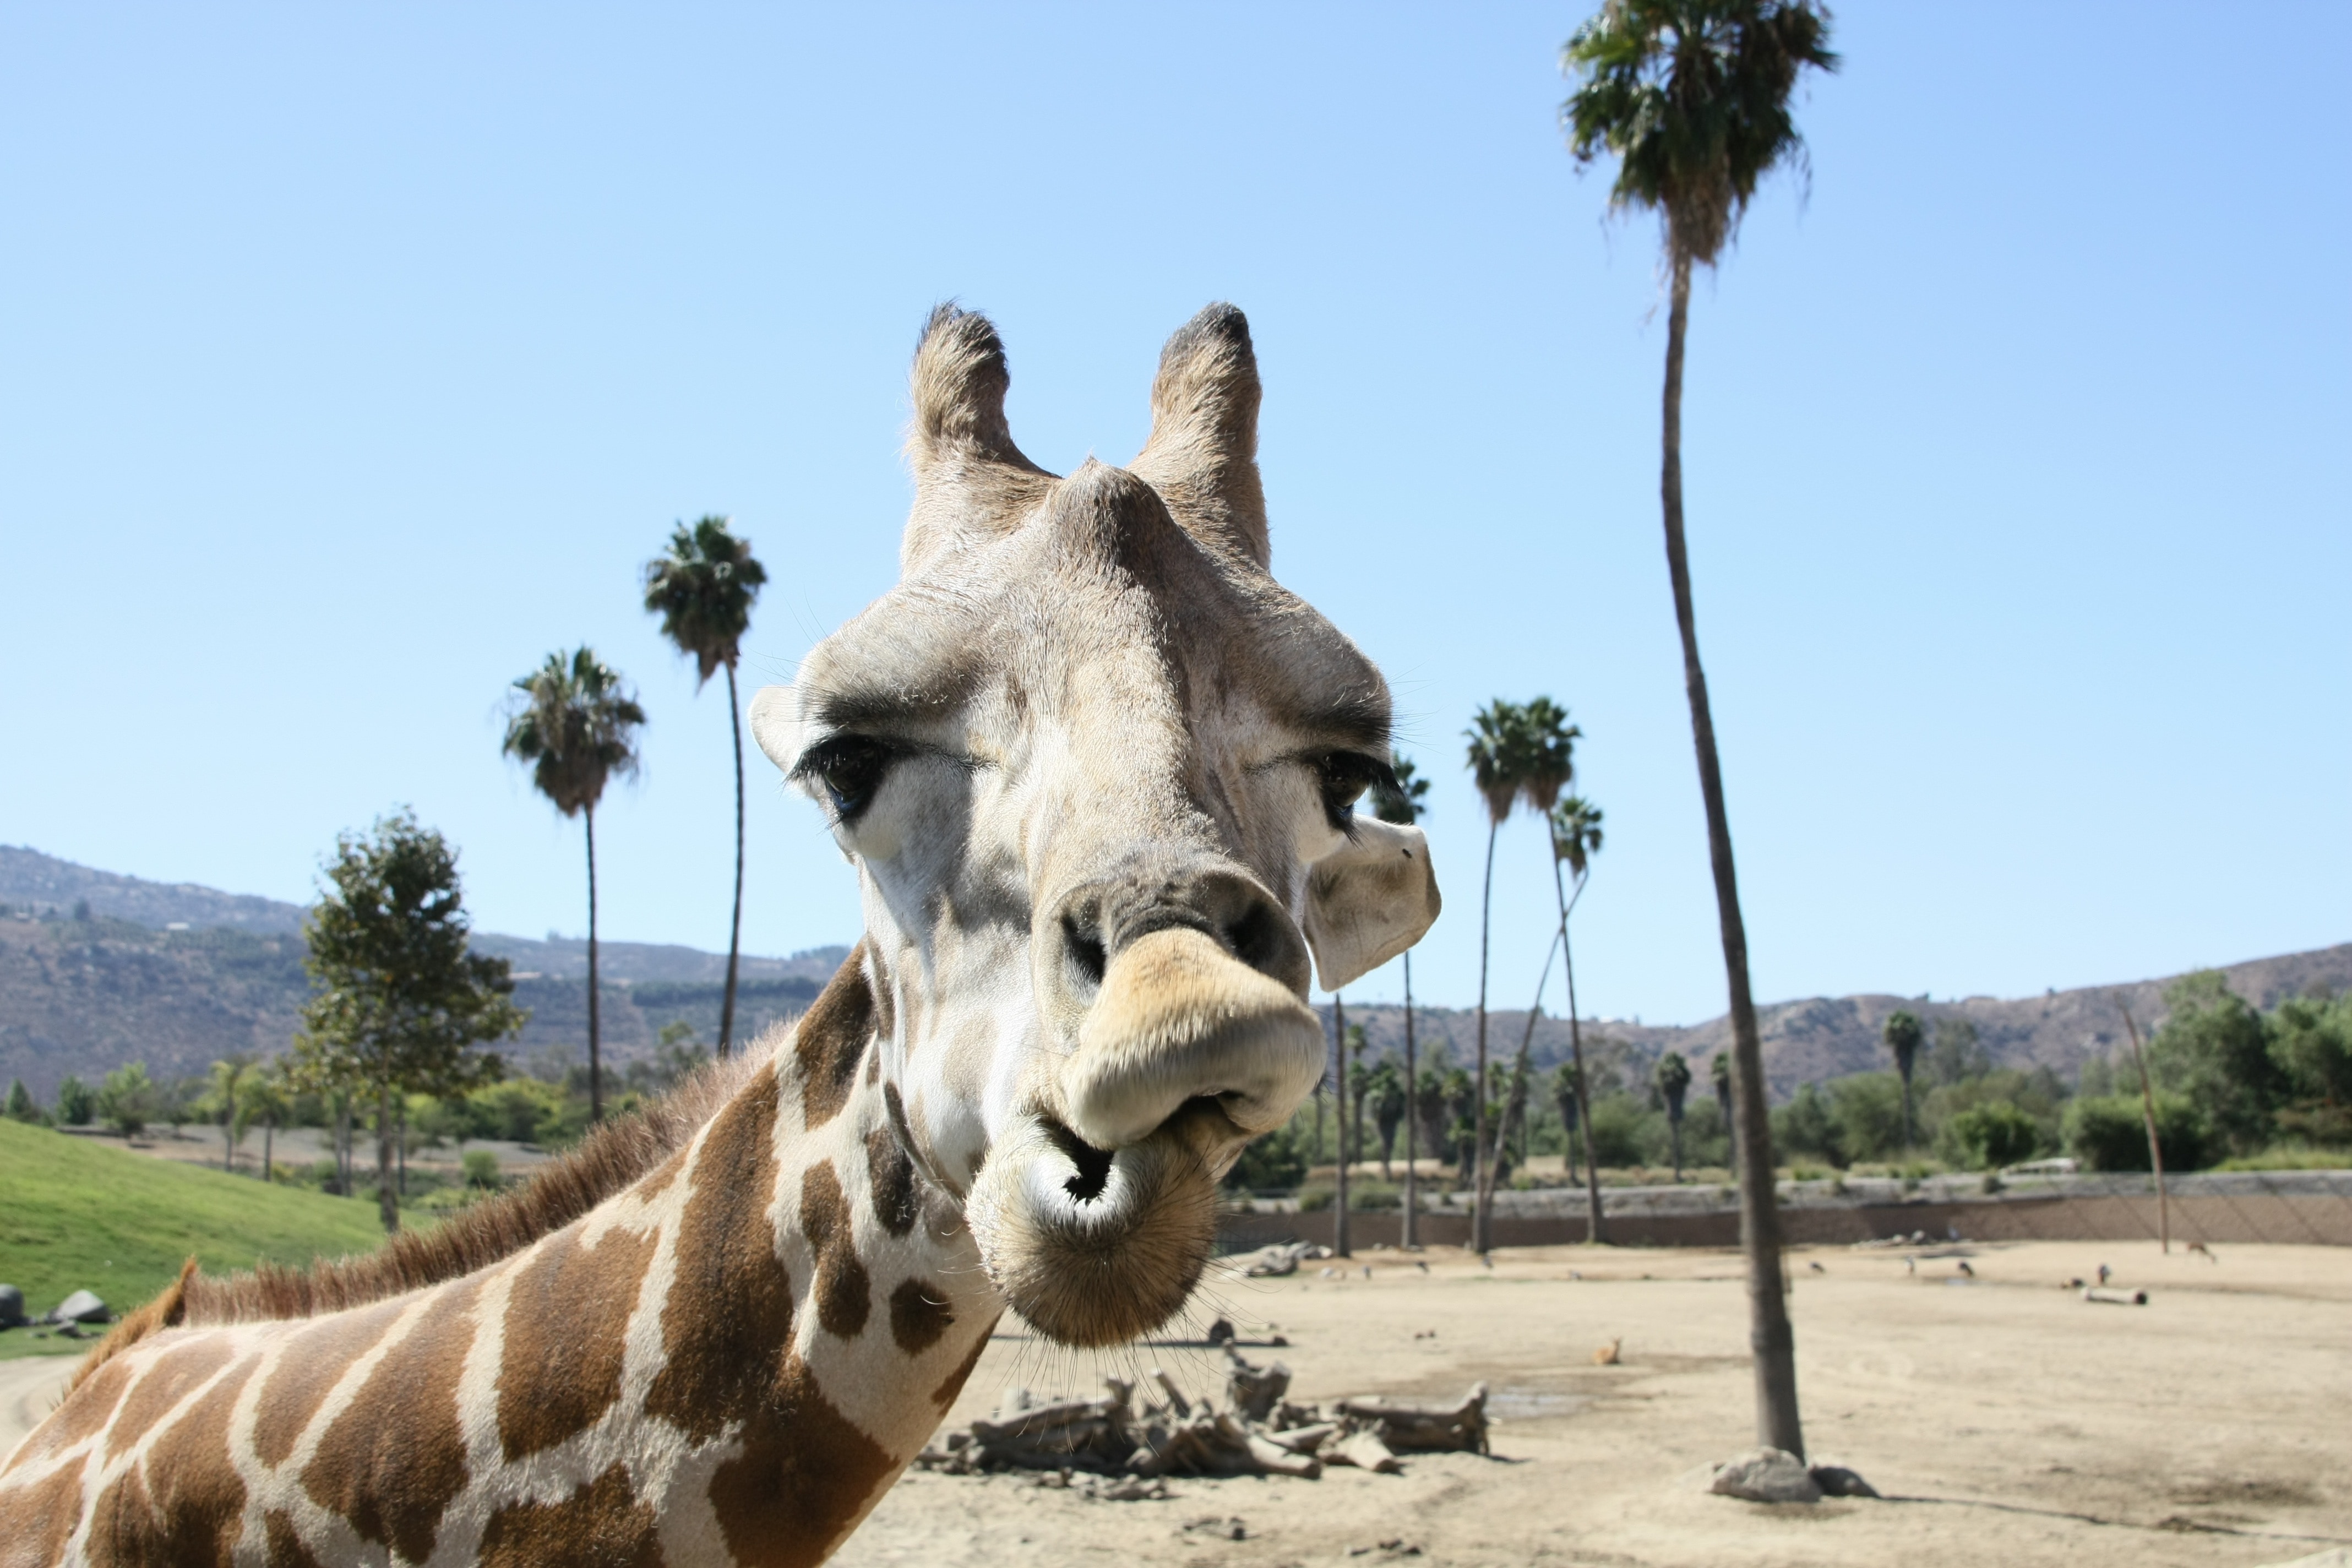 Giraffe, Zoo, San Diego, domestic animals, animal themes